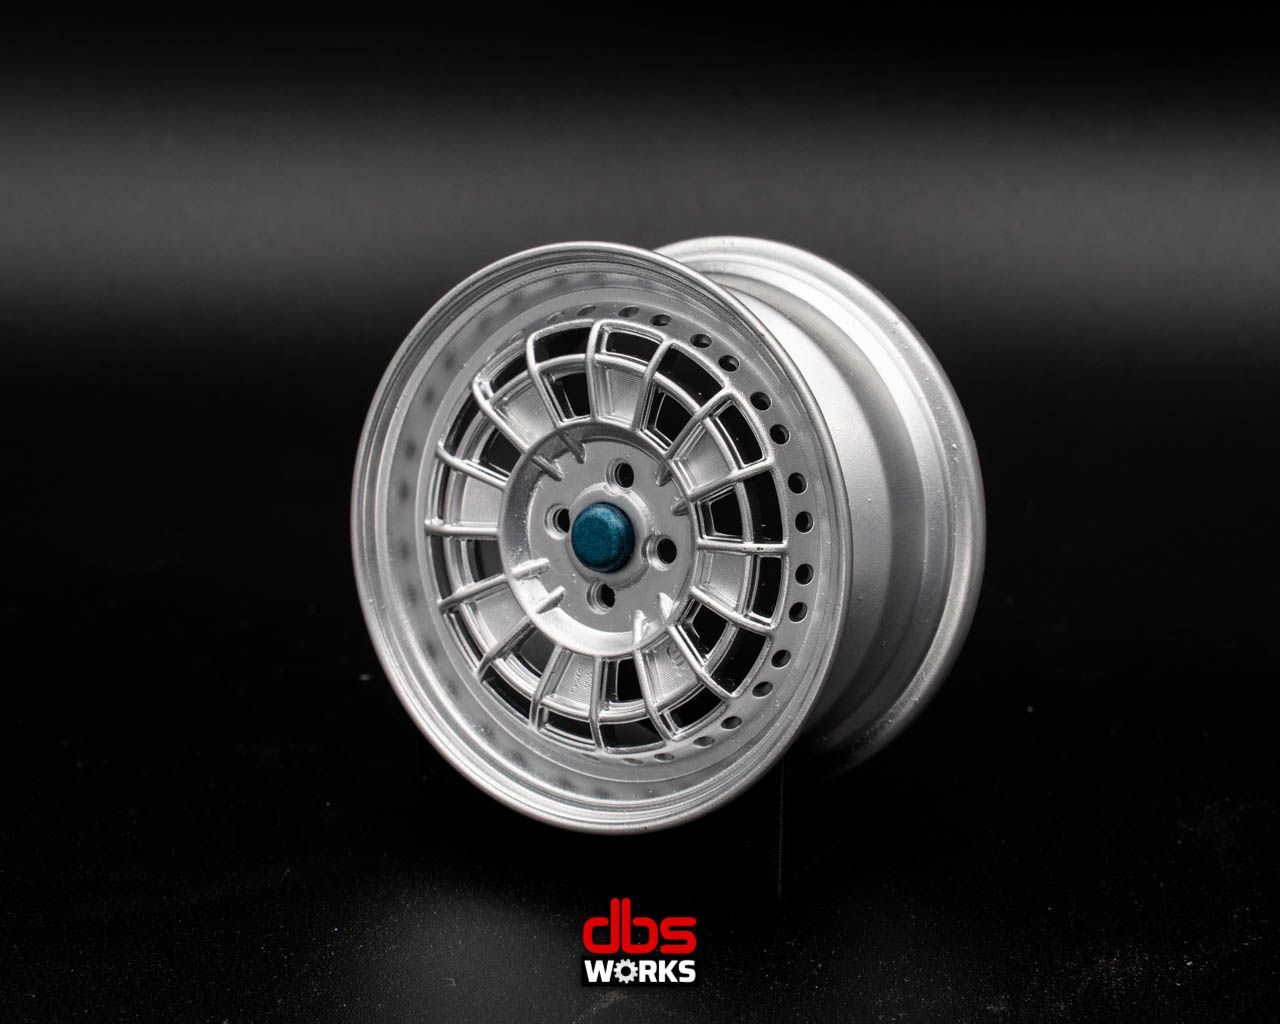 1/5 Mugen NR10R wheel with display case – dbsworks